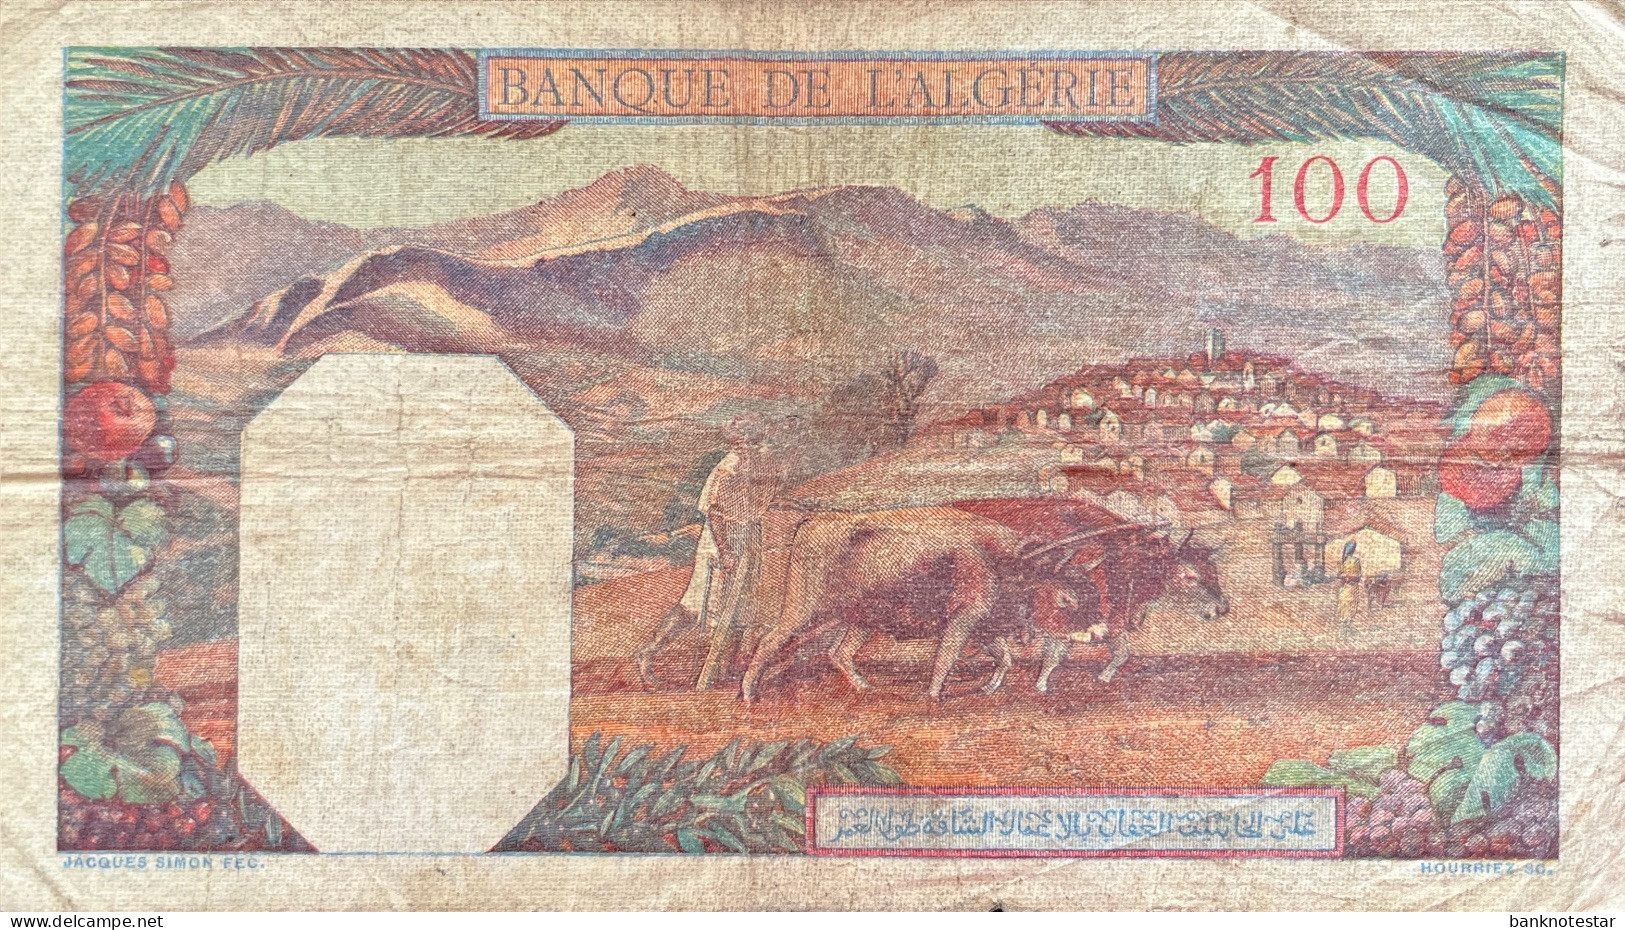 Algeria 100 Francs, P-85 (1940) - Very Good - Algeria